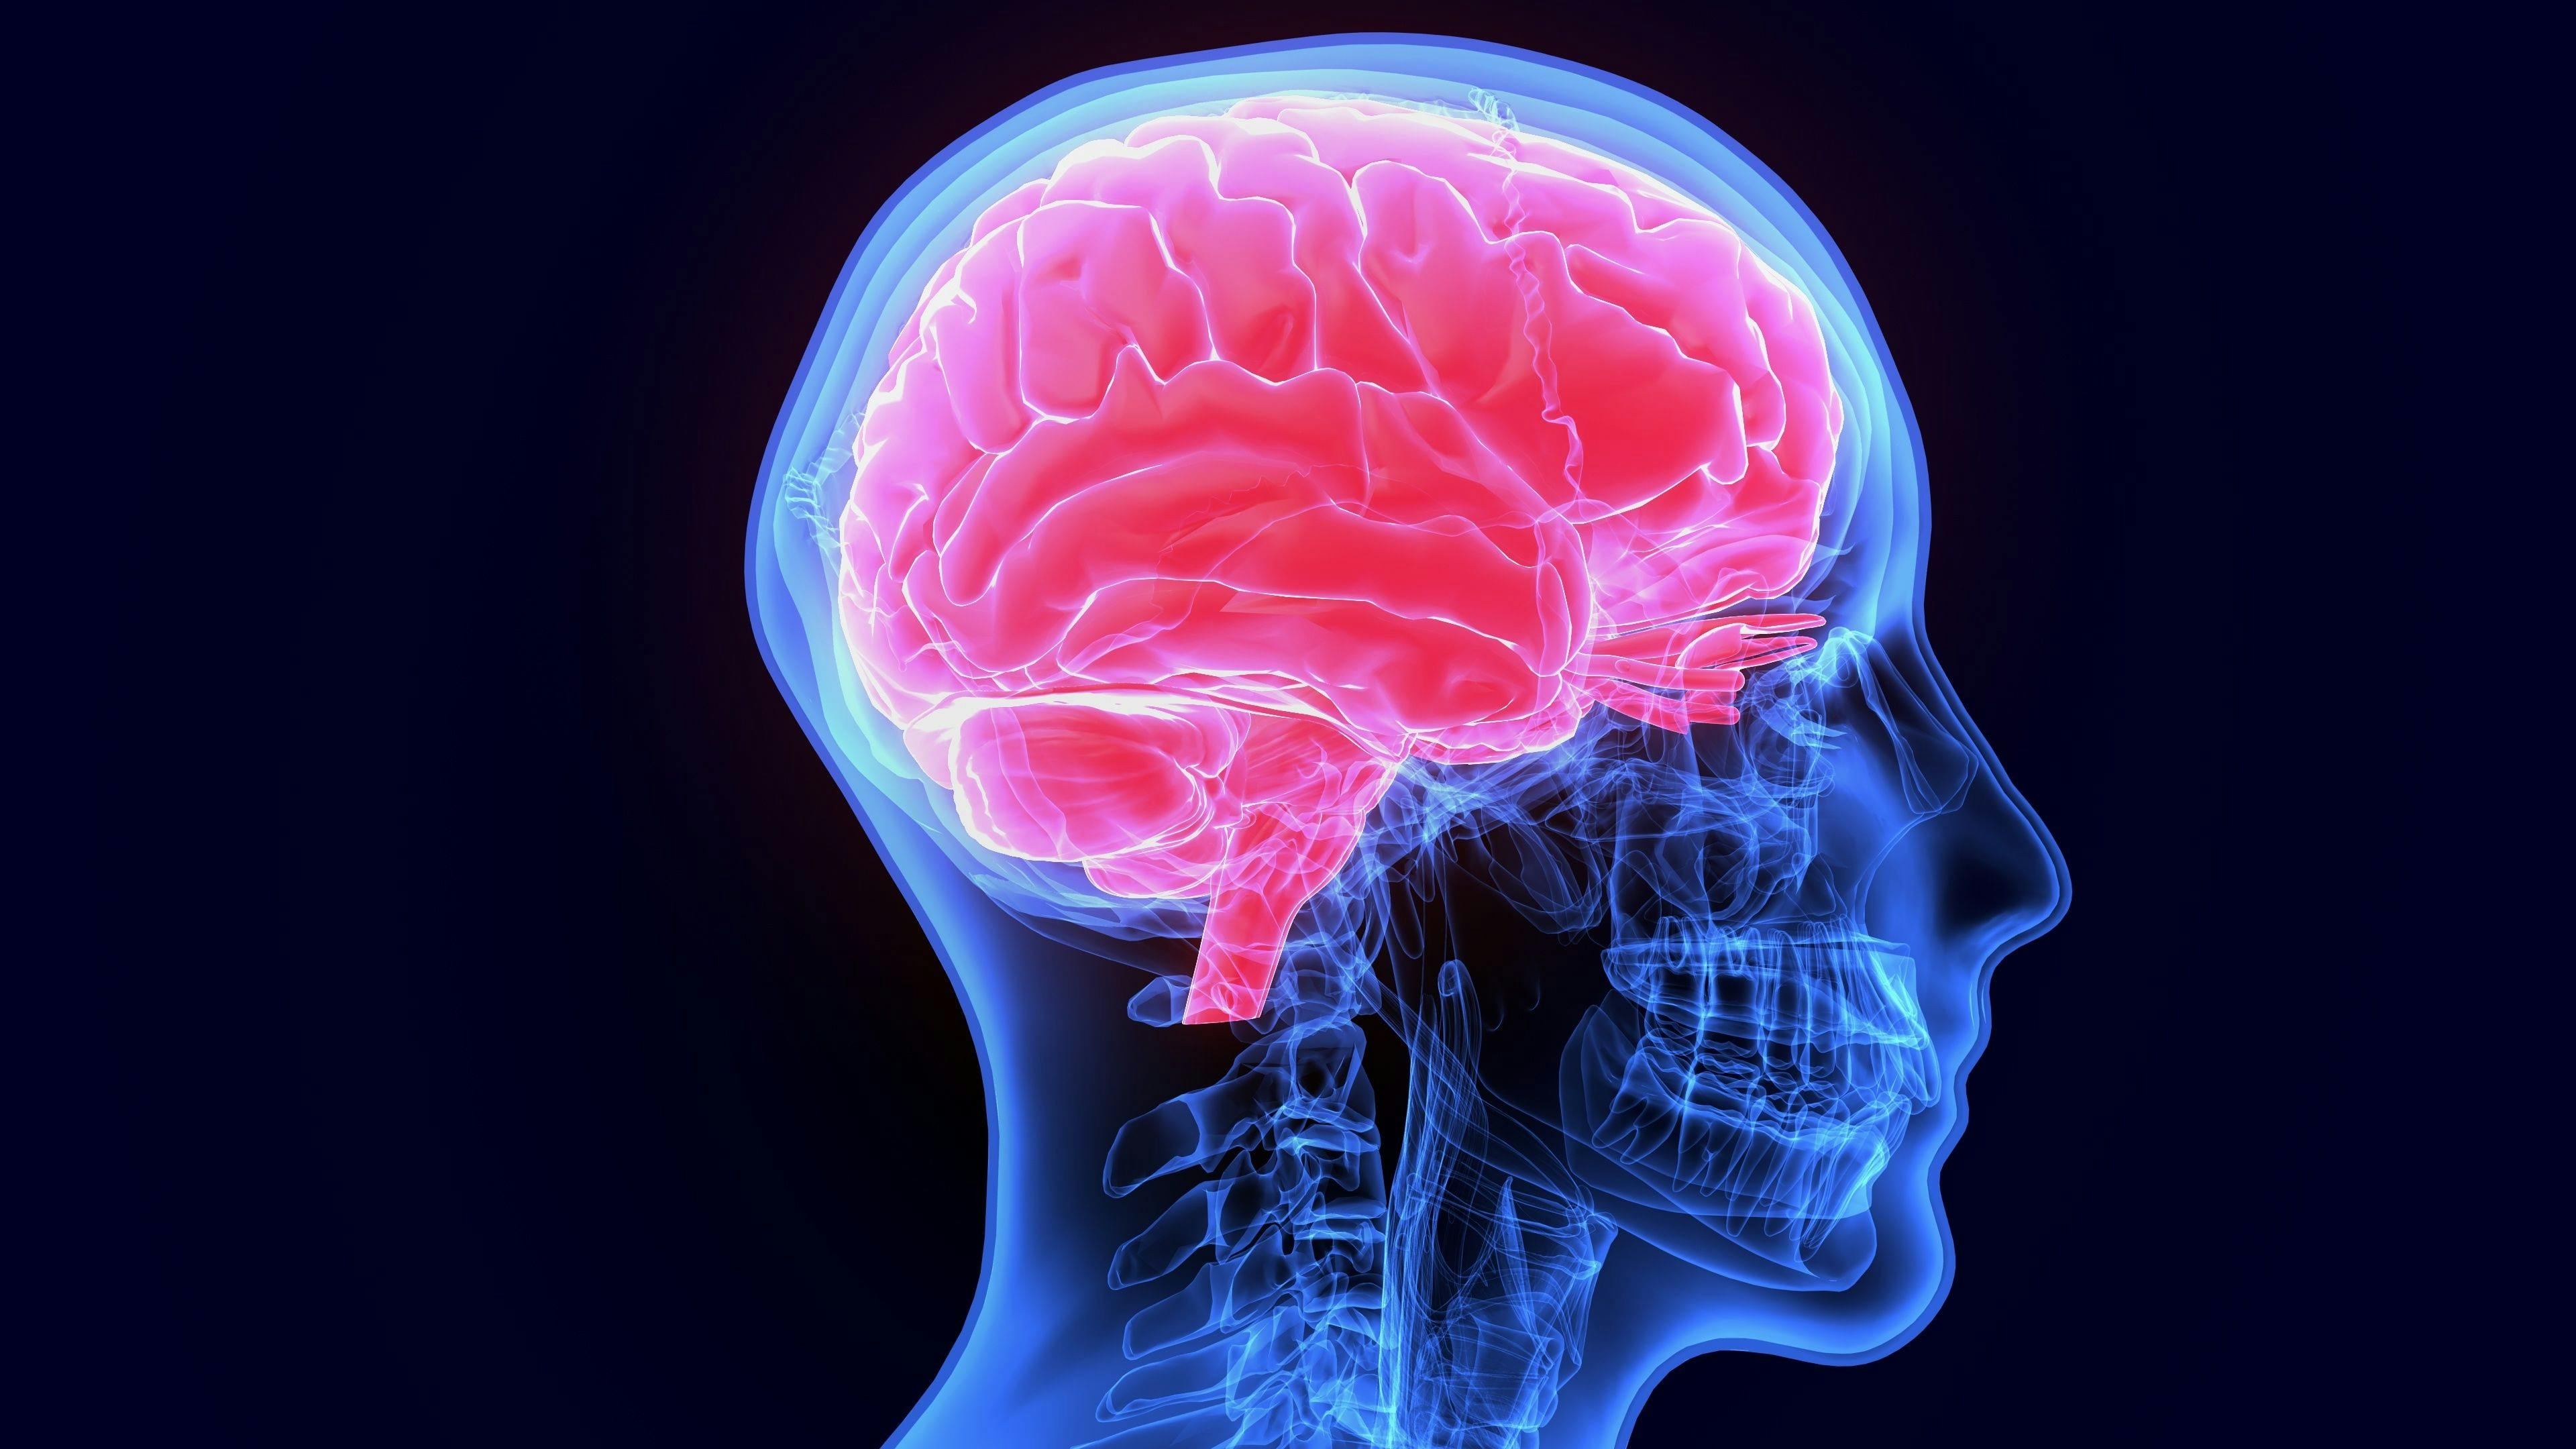 X-ray scan of brain -- Image credit: PIC4U | stock.adobe.com